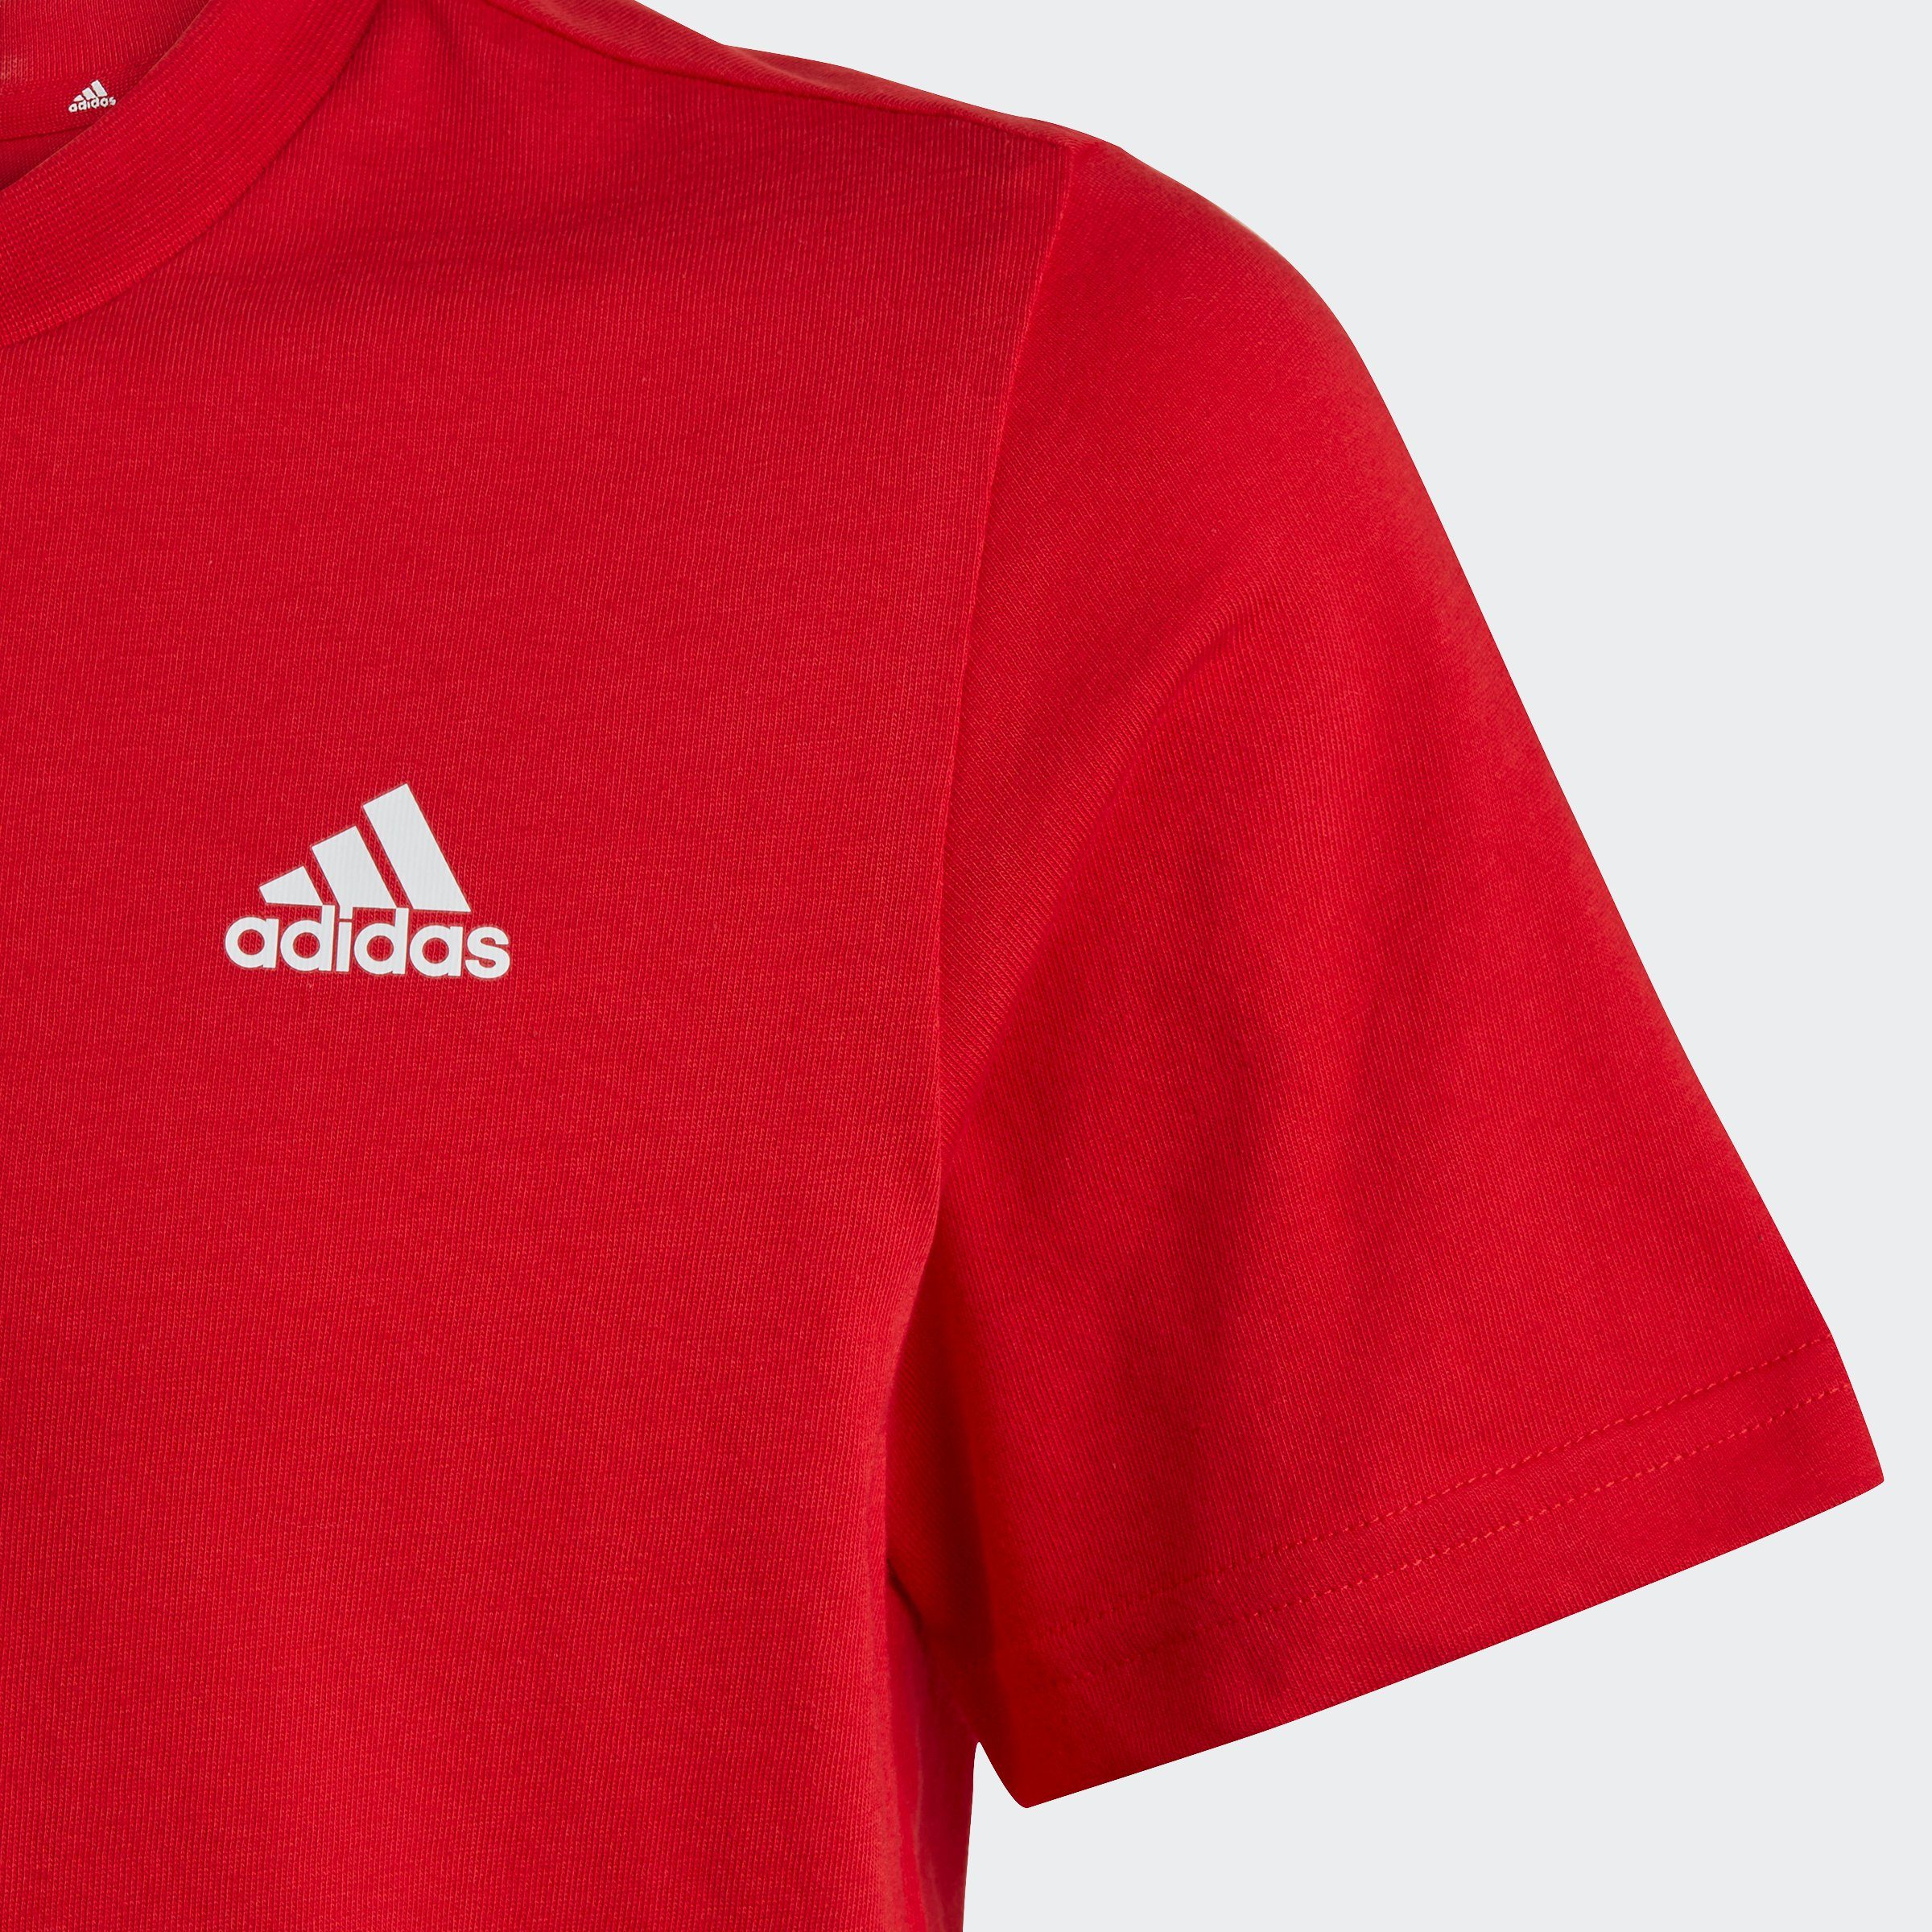 LOGO adidas Scarlet Sportswear Better T-Shirt / White ESSENTIALS SMALL COTTON